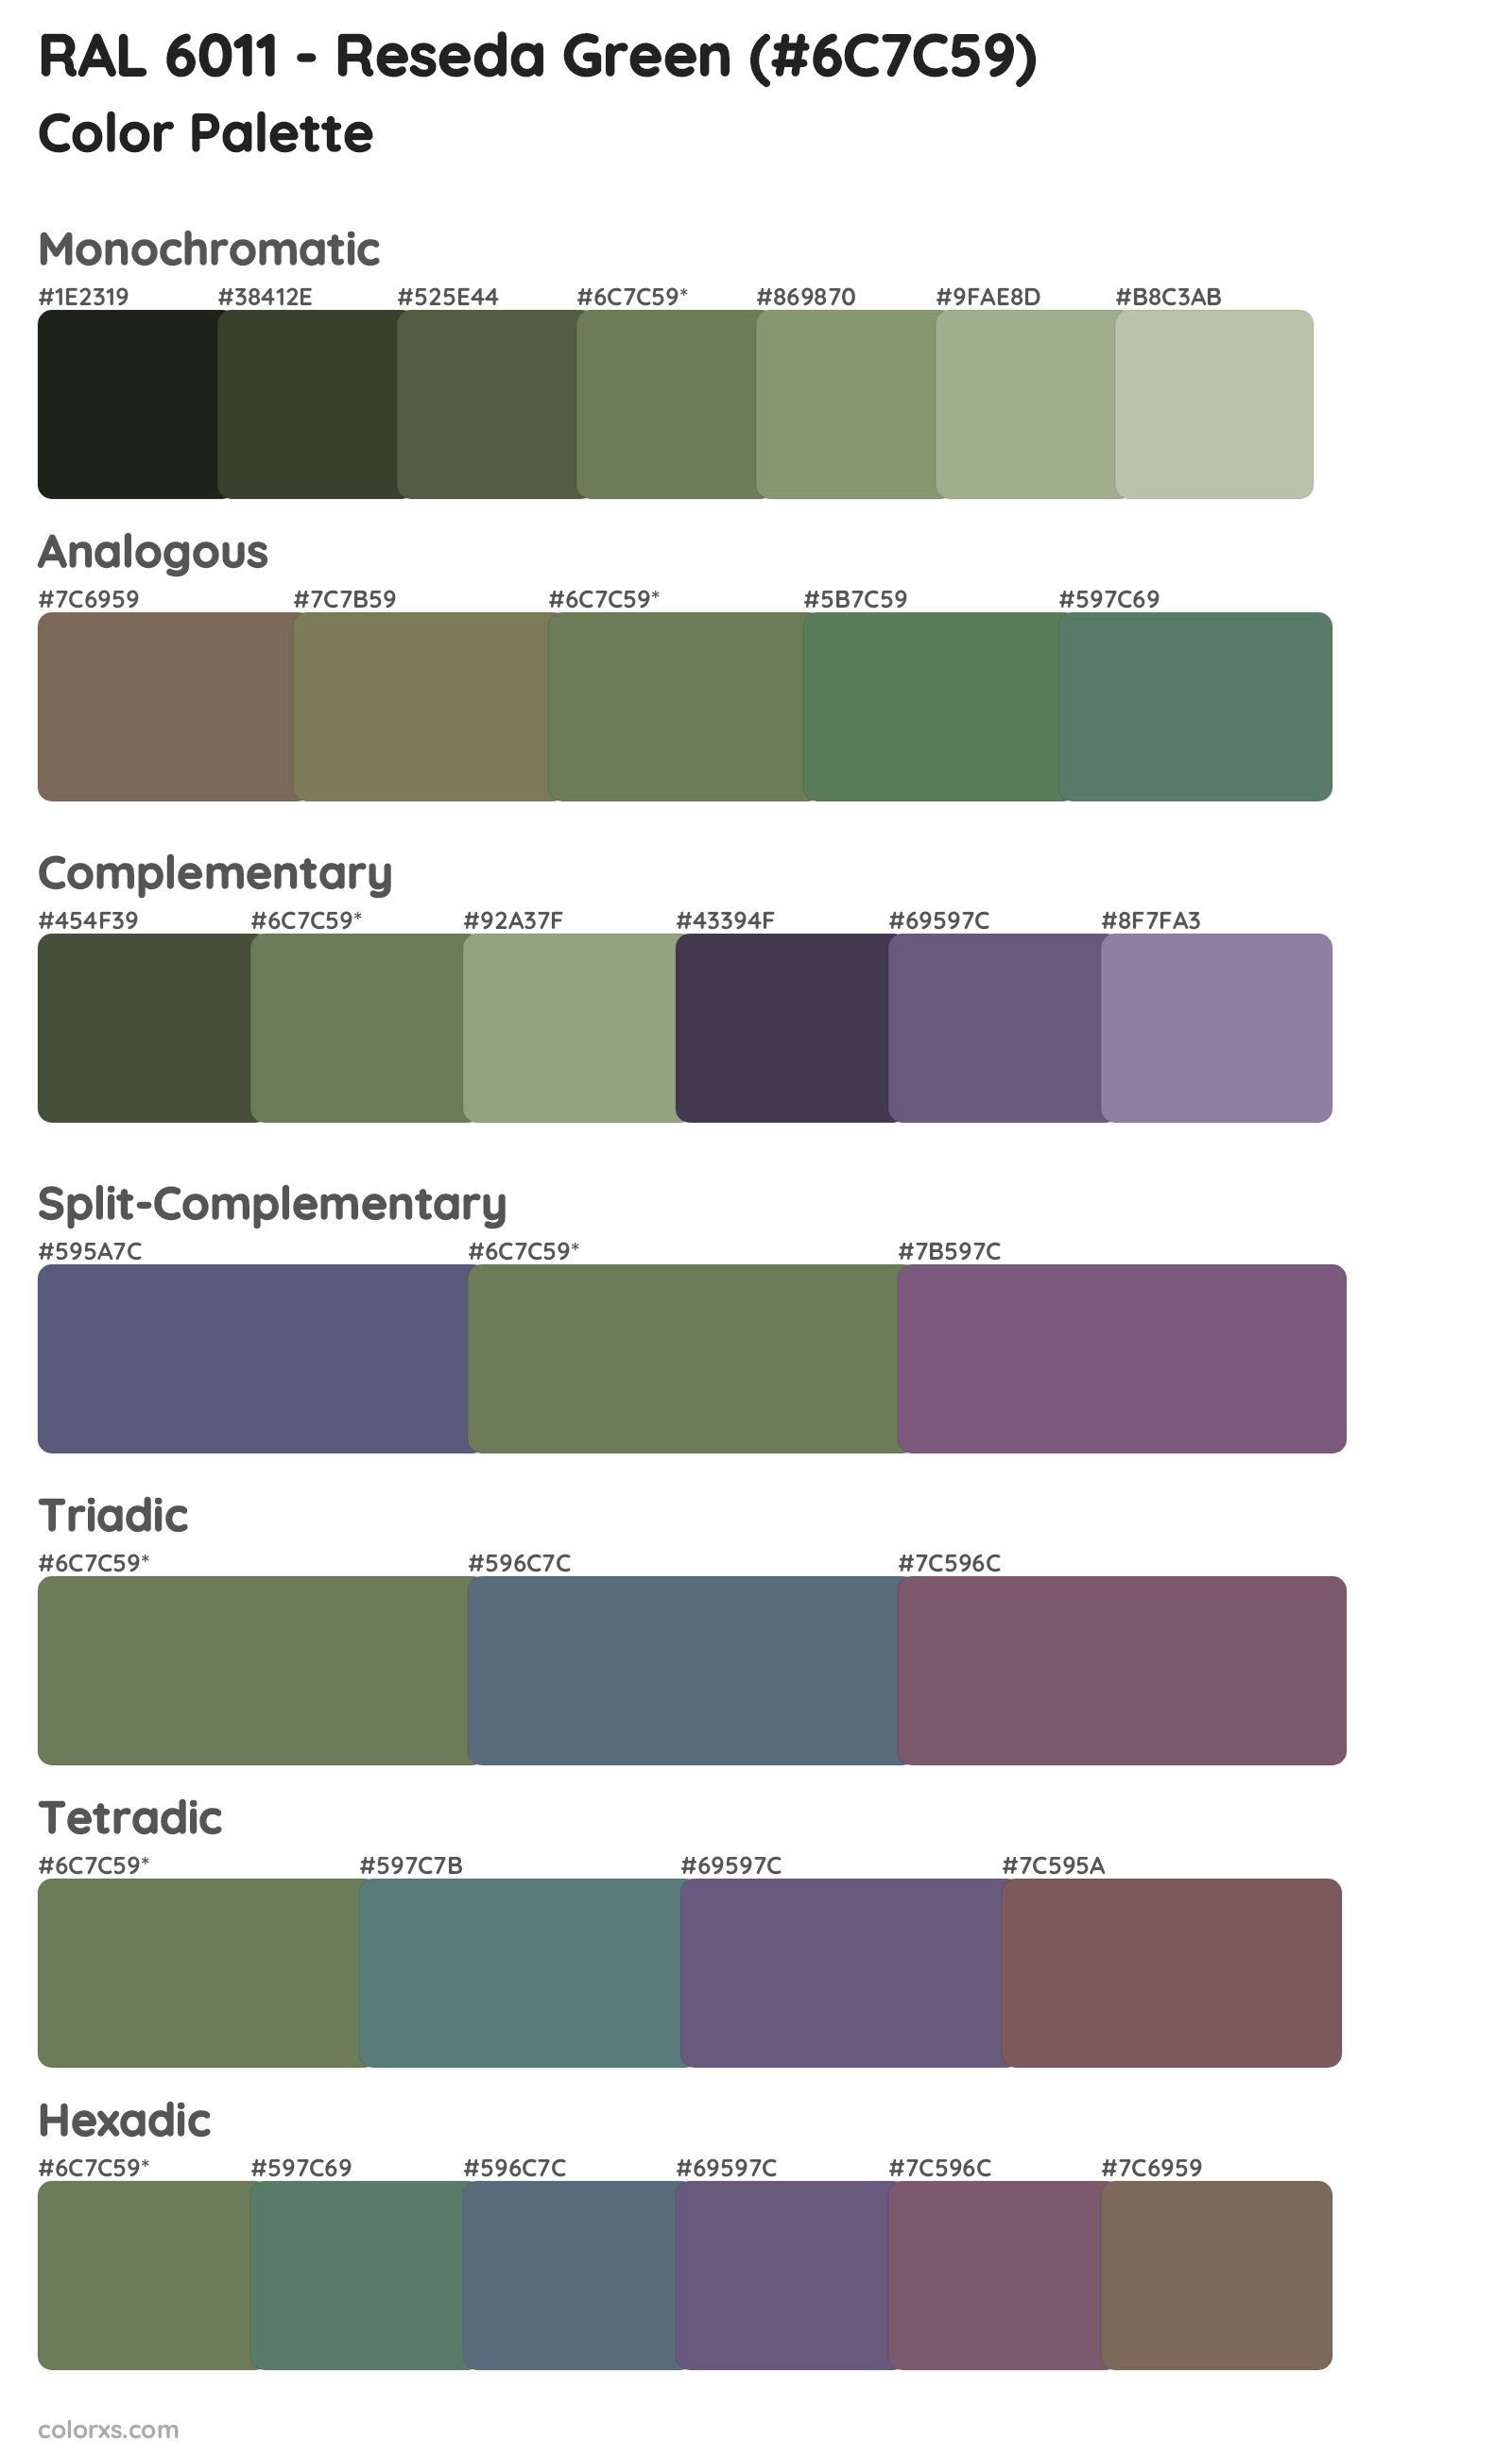 RAL 6011 - Reseda Green Color Scheme Palettes